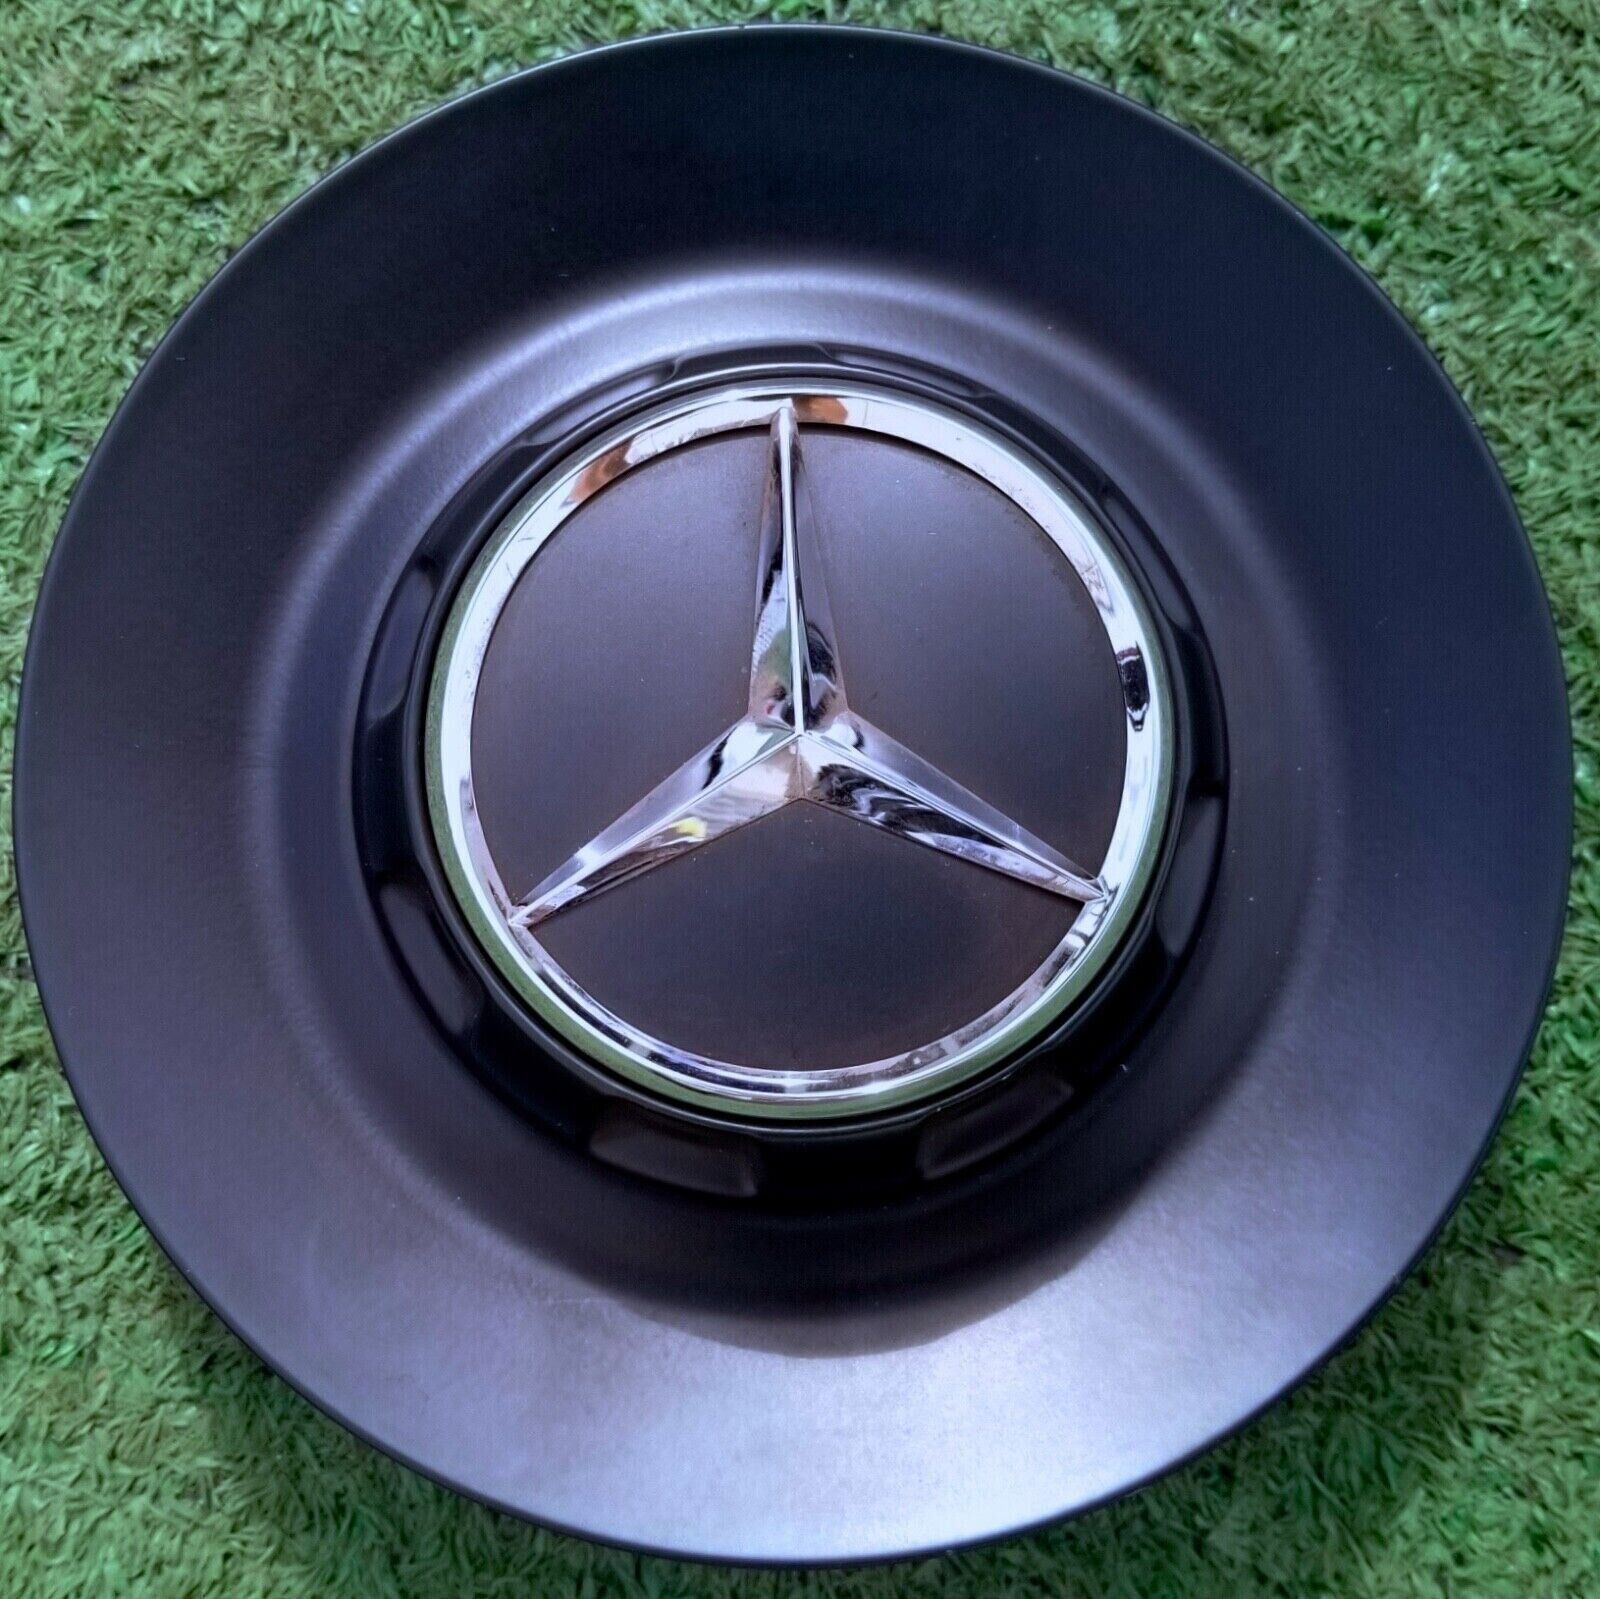 Factory Mercedes Benz Black Center Cap Forged Wheels OEM C63 S65 00040011009283